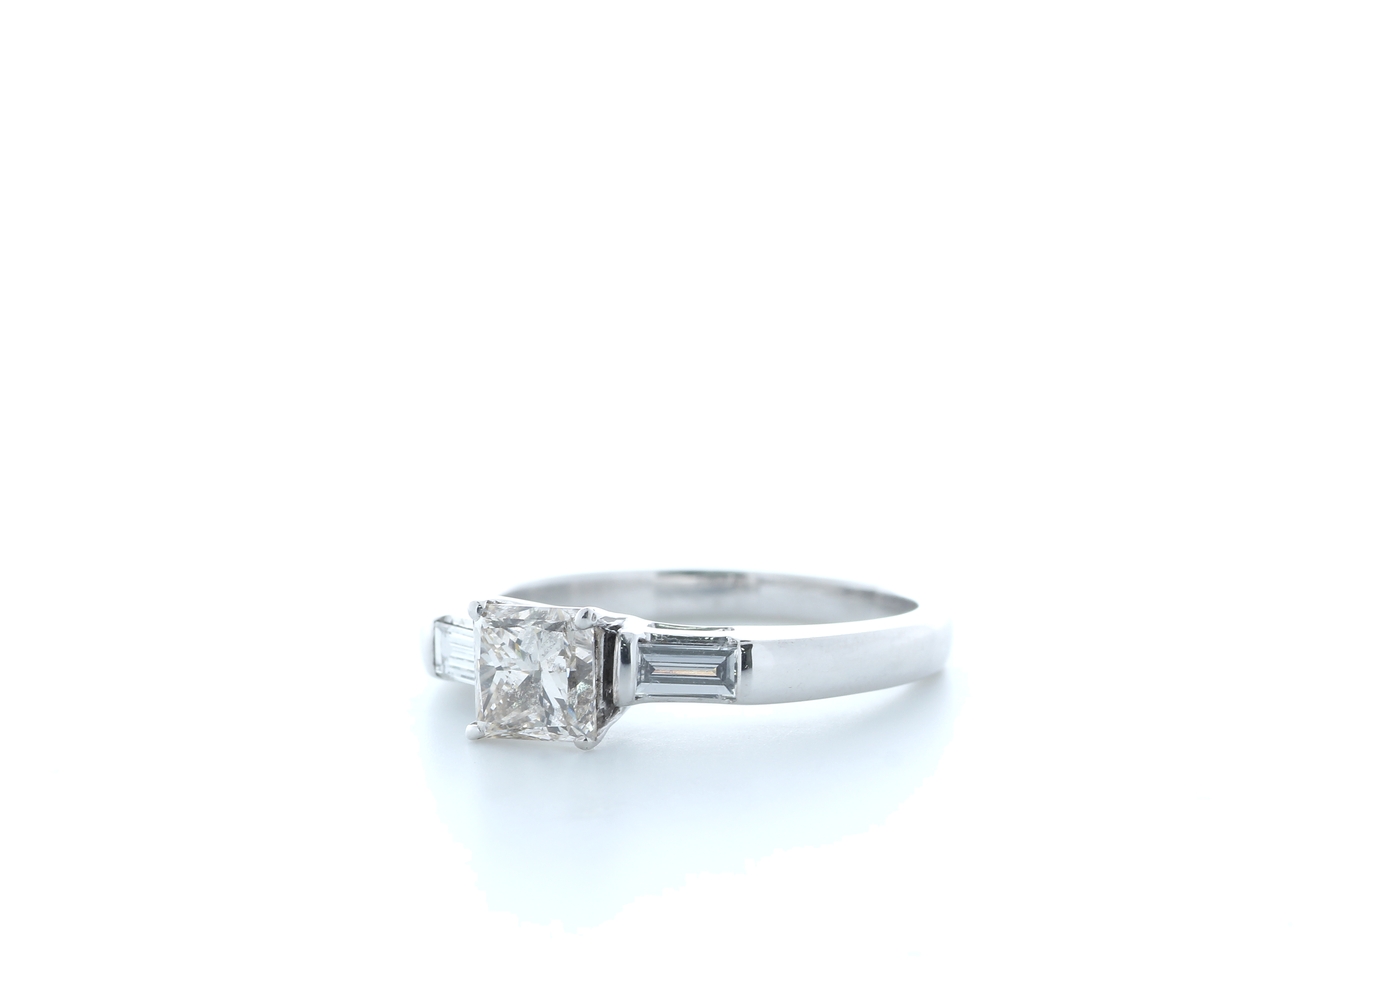 18ct White Gold Princess Cut Diamond Ring 1.20 (1.01) Carats - Image 2 of 5